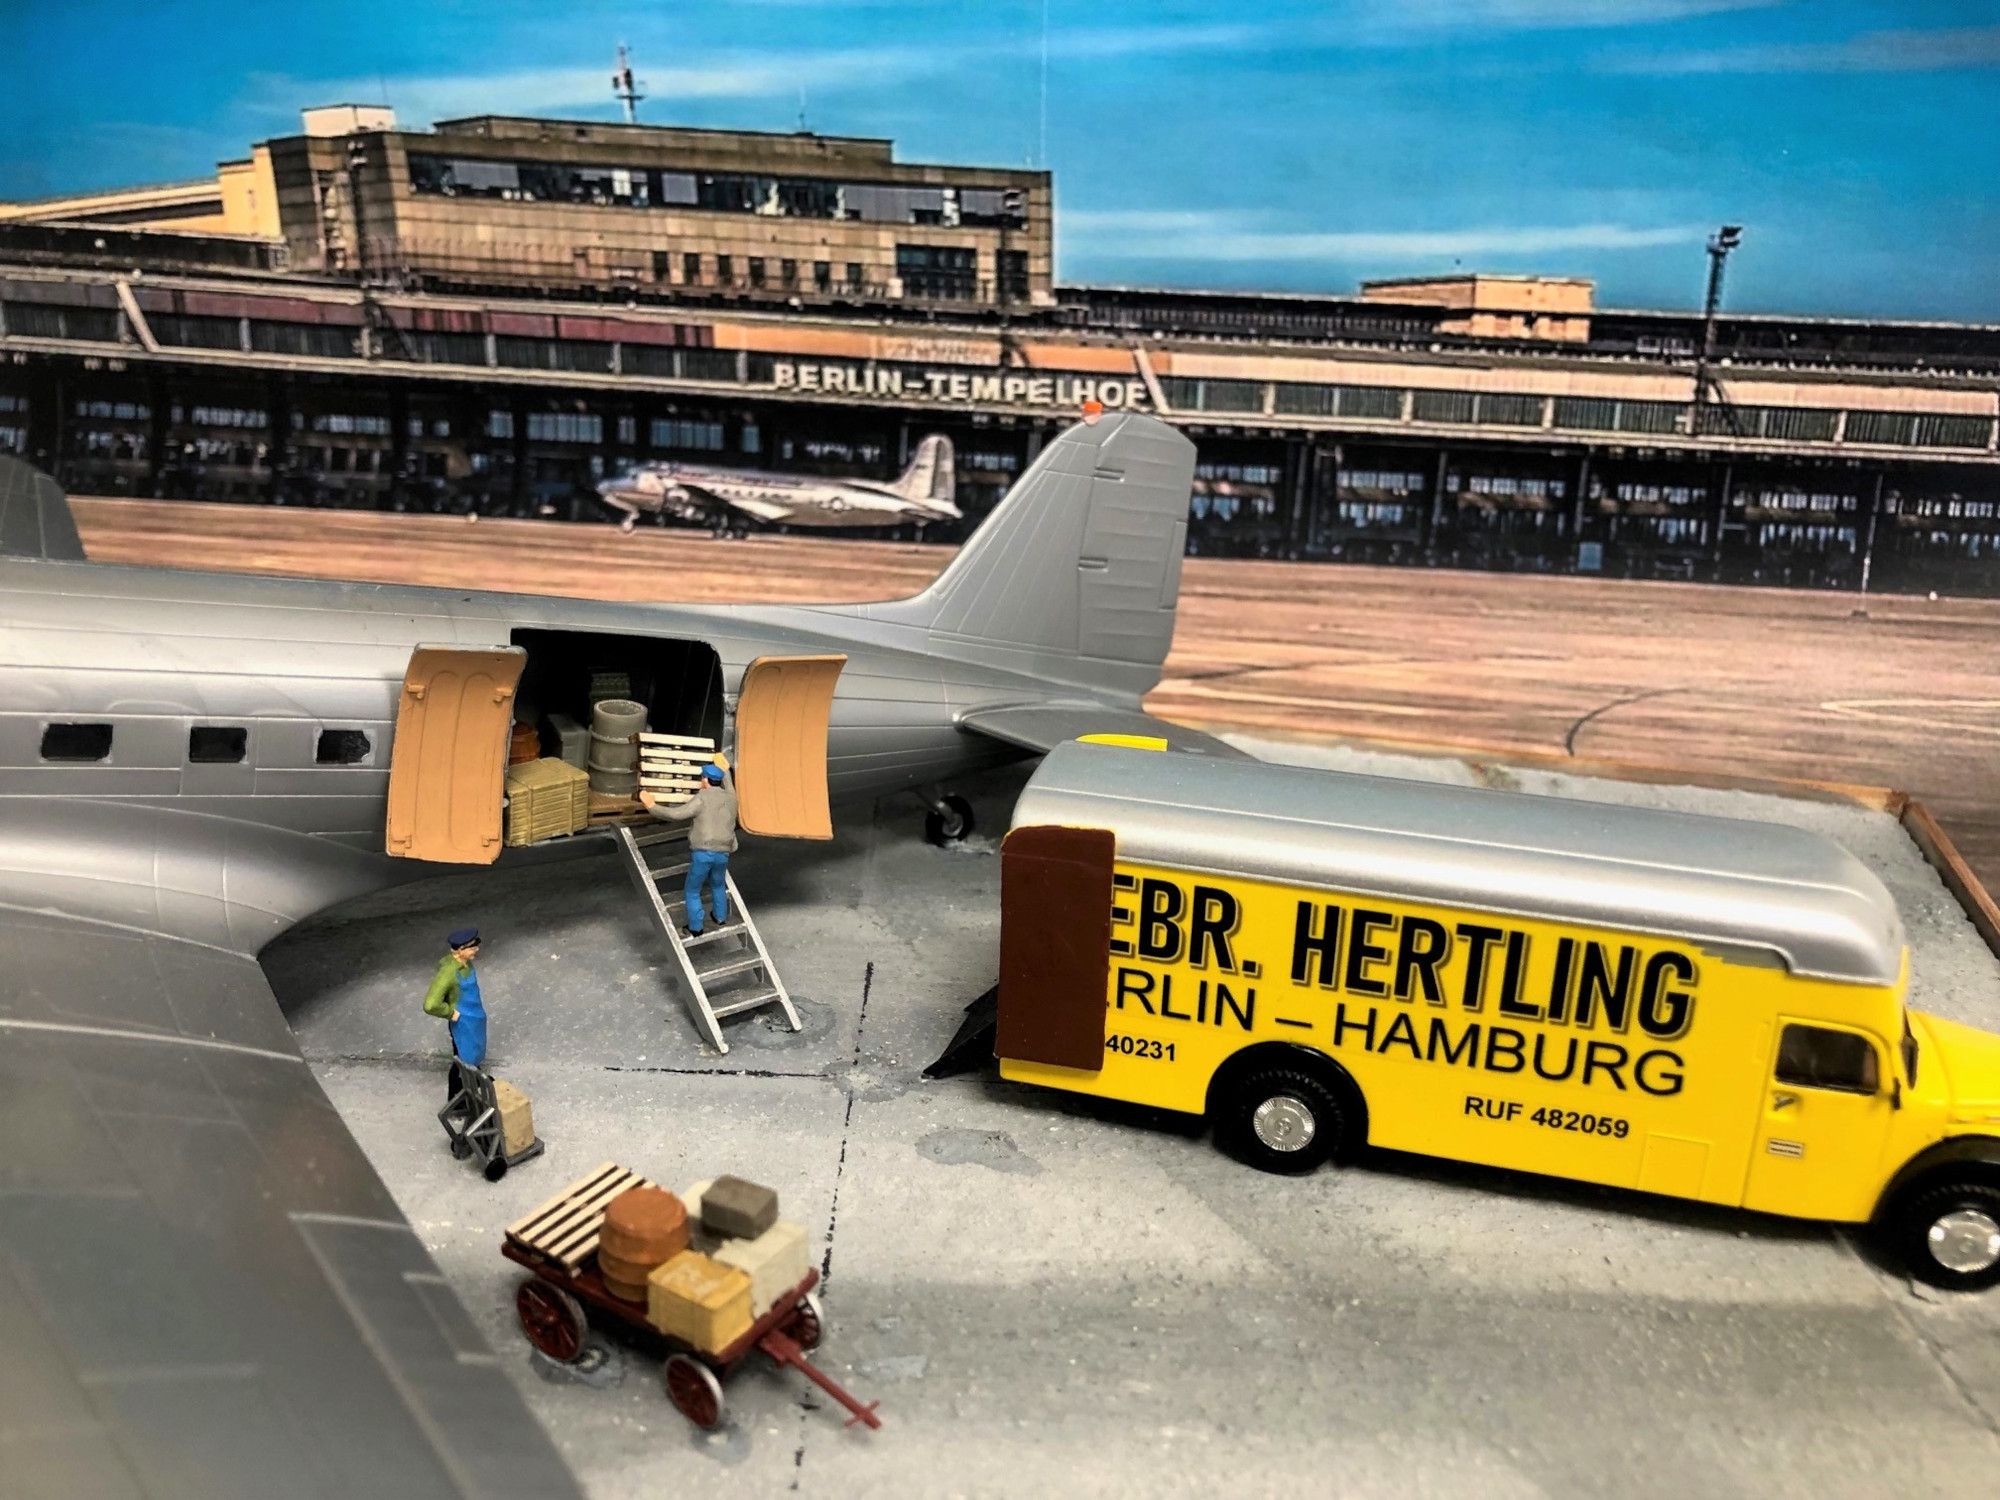 HERTLING Airlift Berlin model